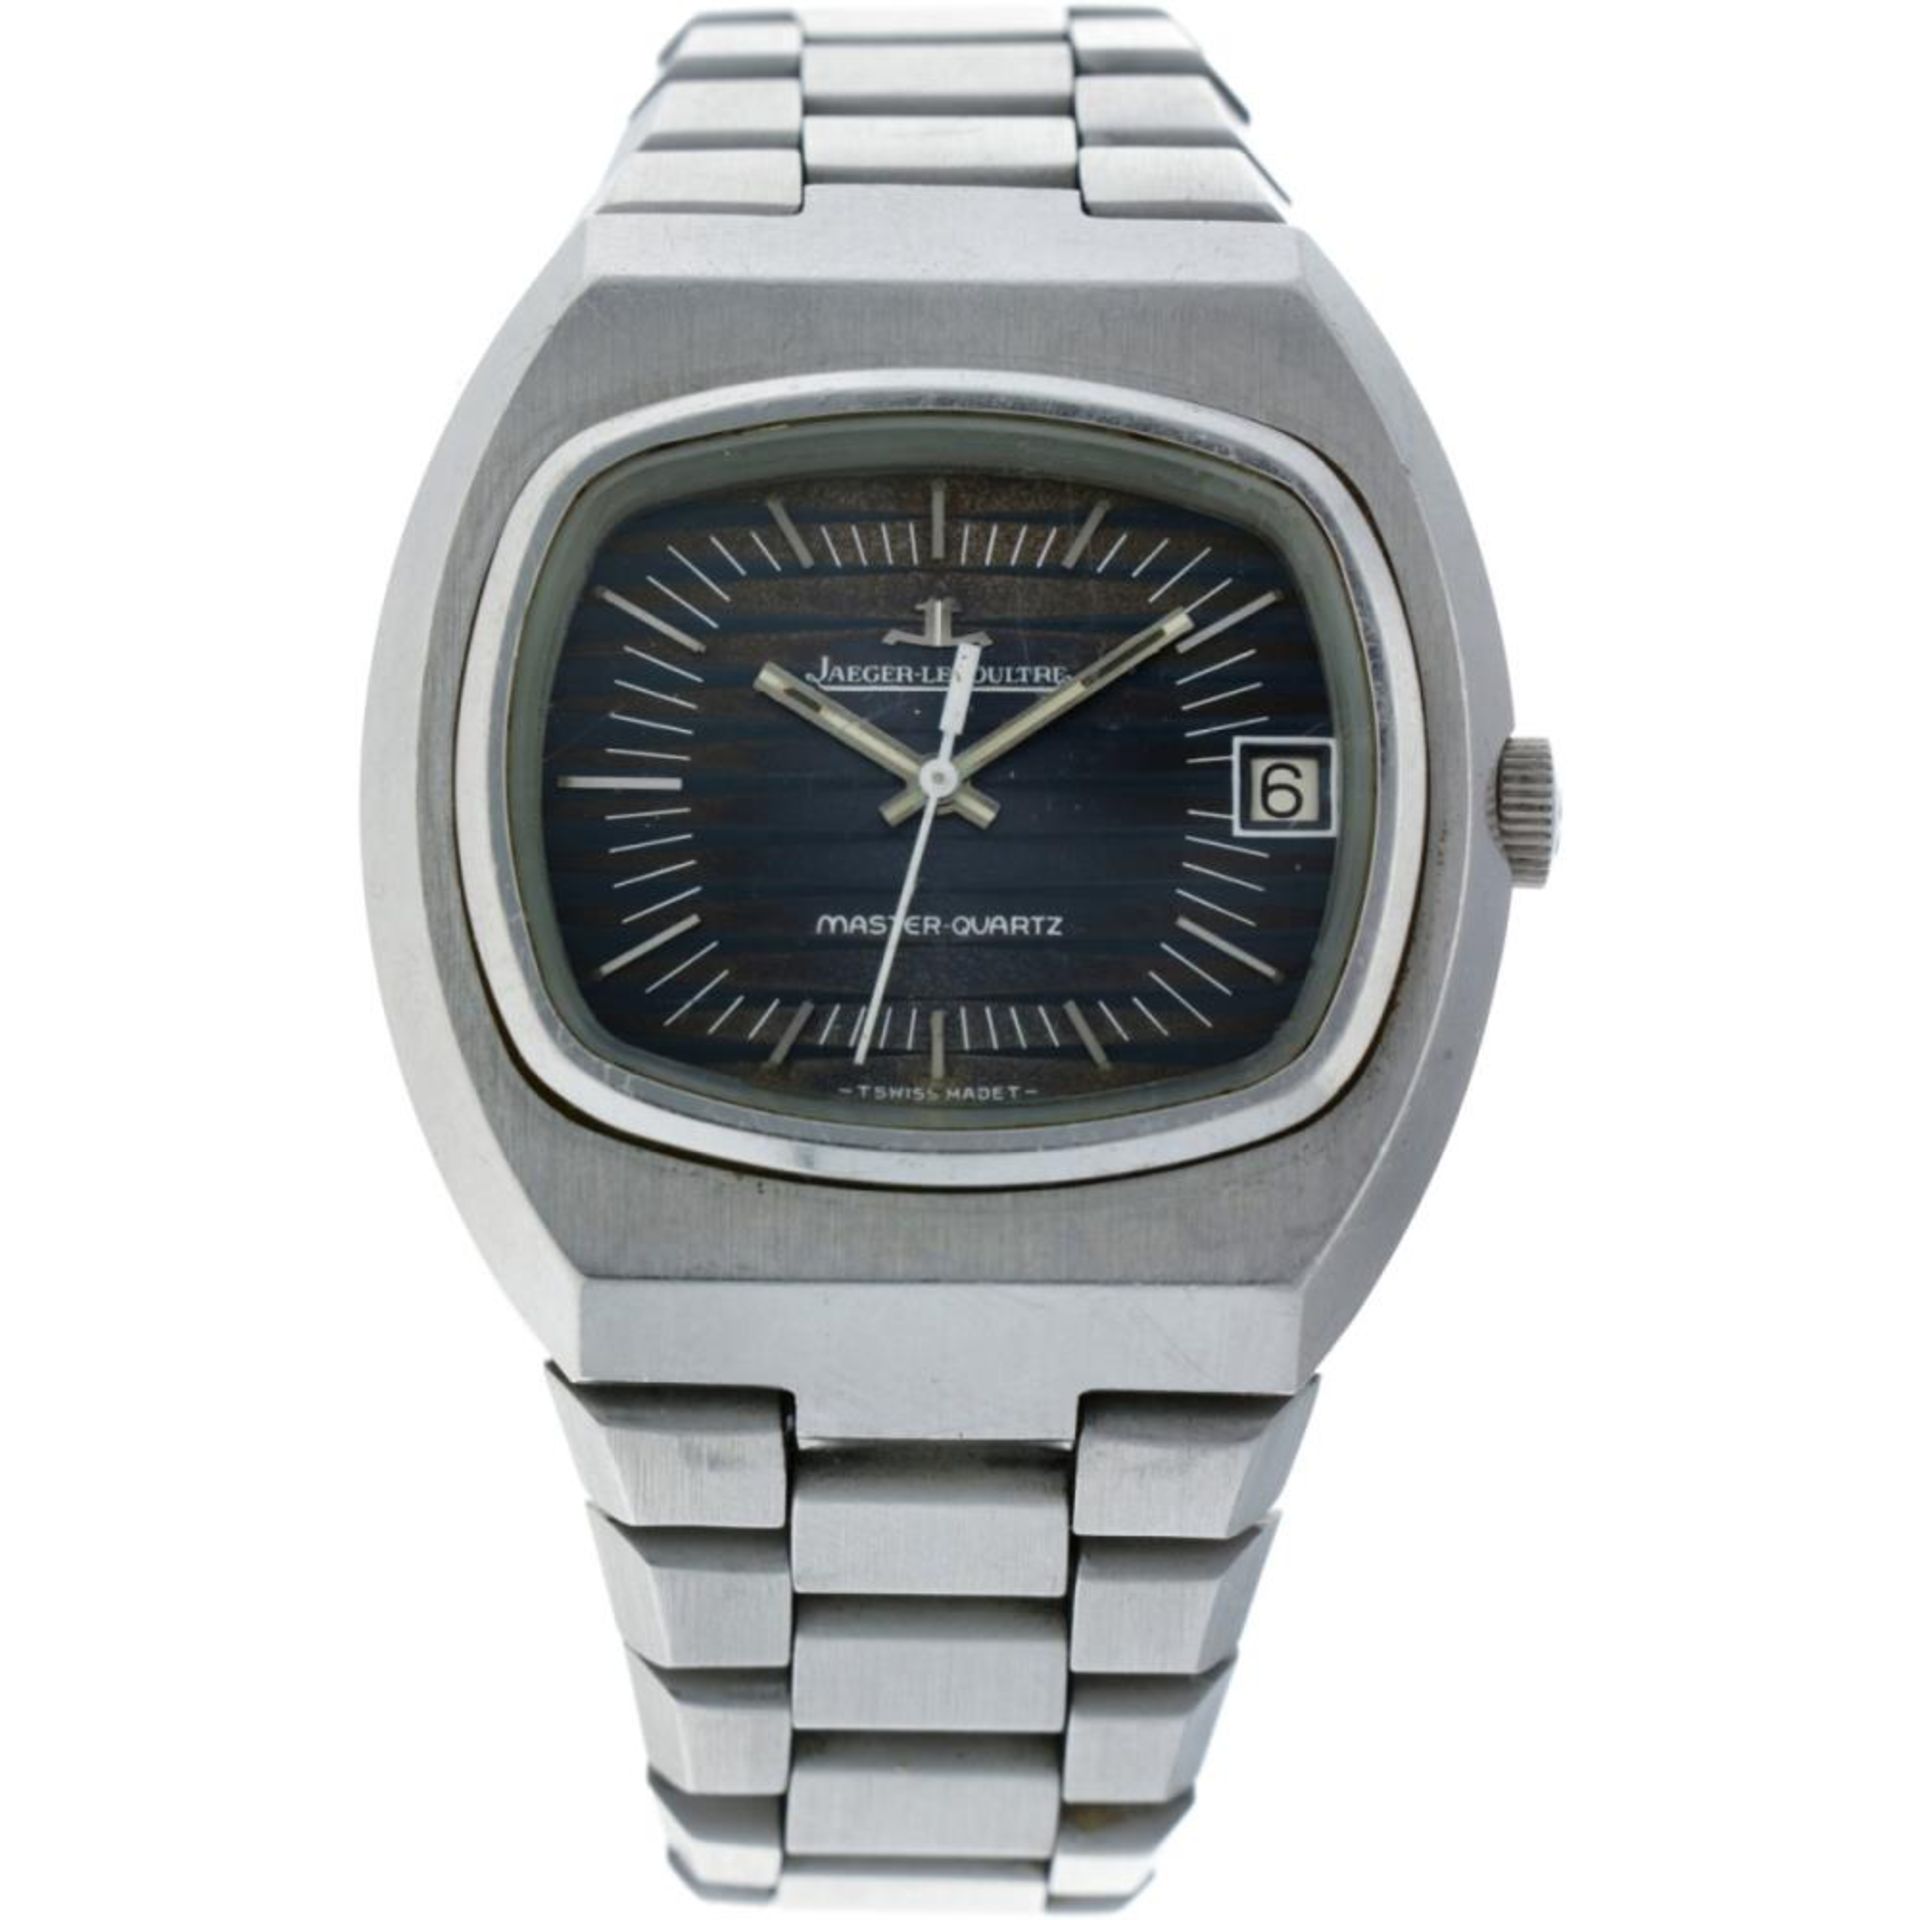 Jaeger-LeCoultre Master-Quartz 23302-42 - Men's watch - approx. 1970.